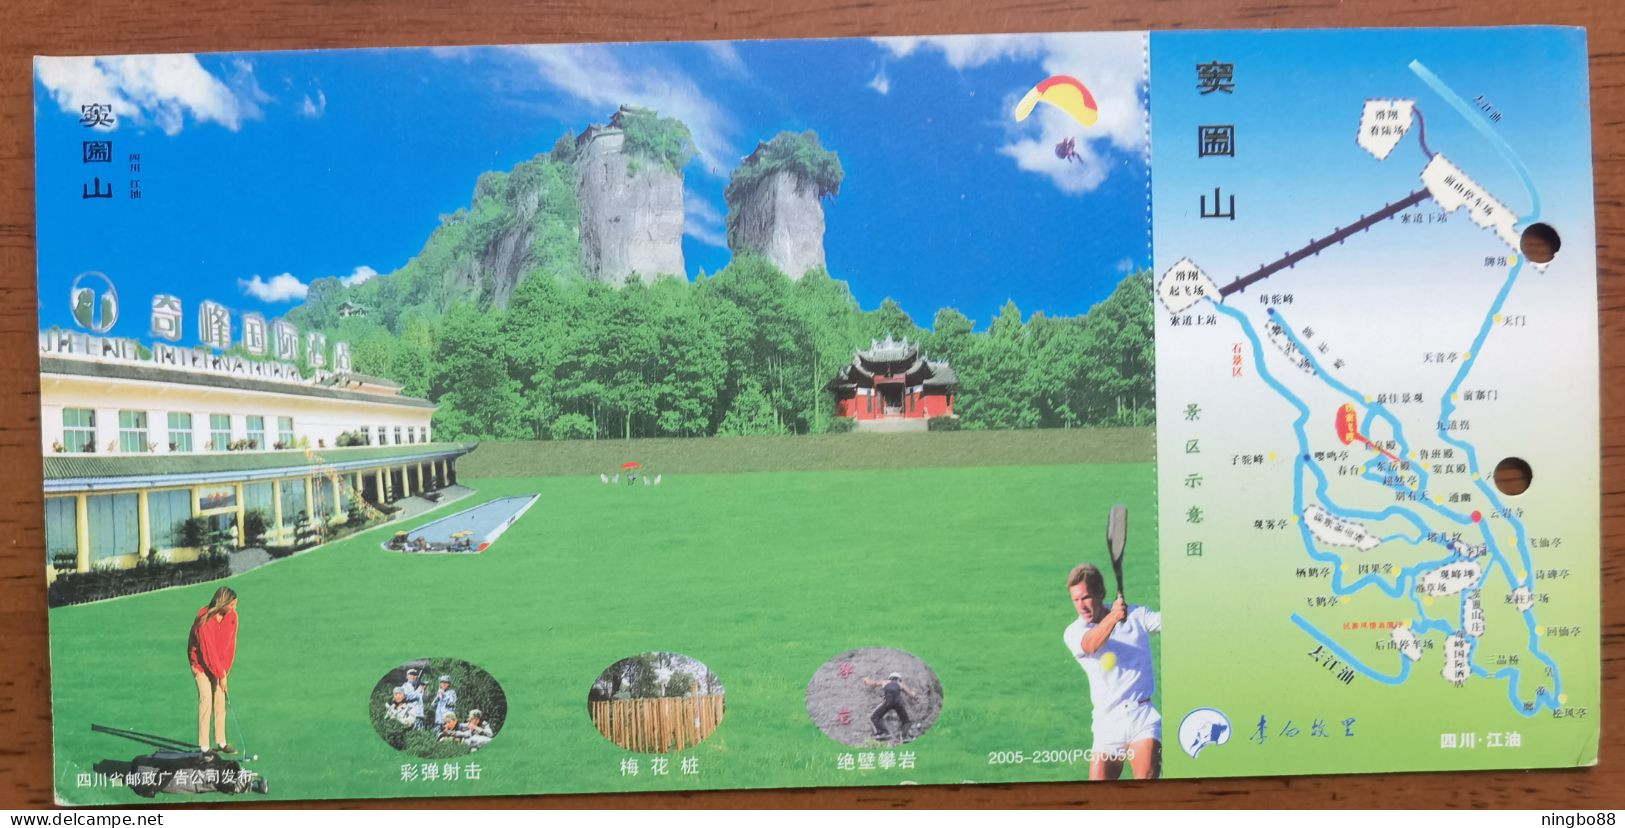 Golf,Rock Climbing,Tennis,painball Shooting,parachuting,CN05 Mt.doutuanshan Scenic Area Ticket Pre-stamped Card - Tennis